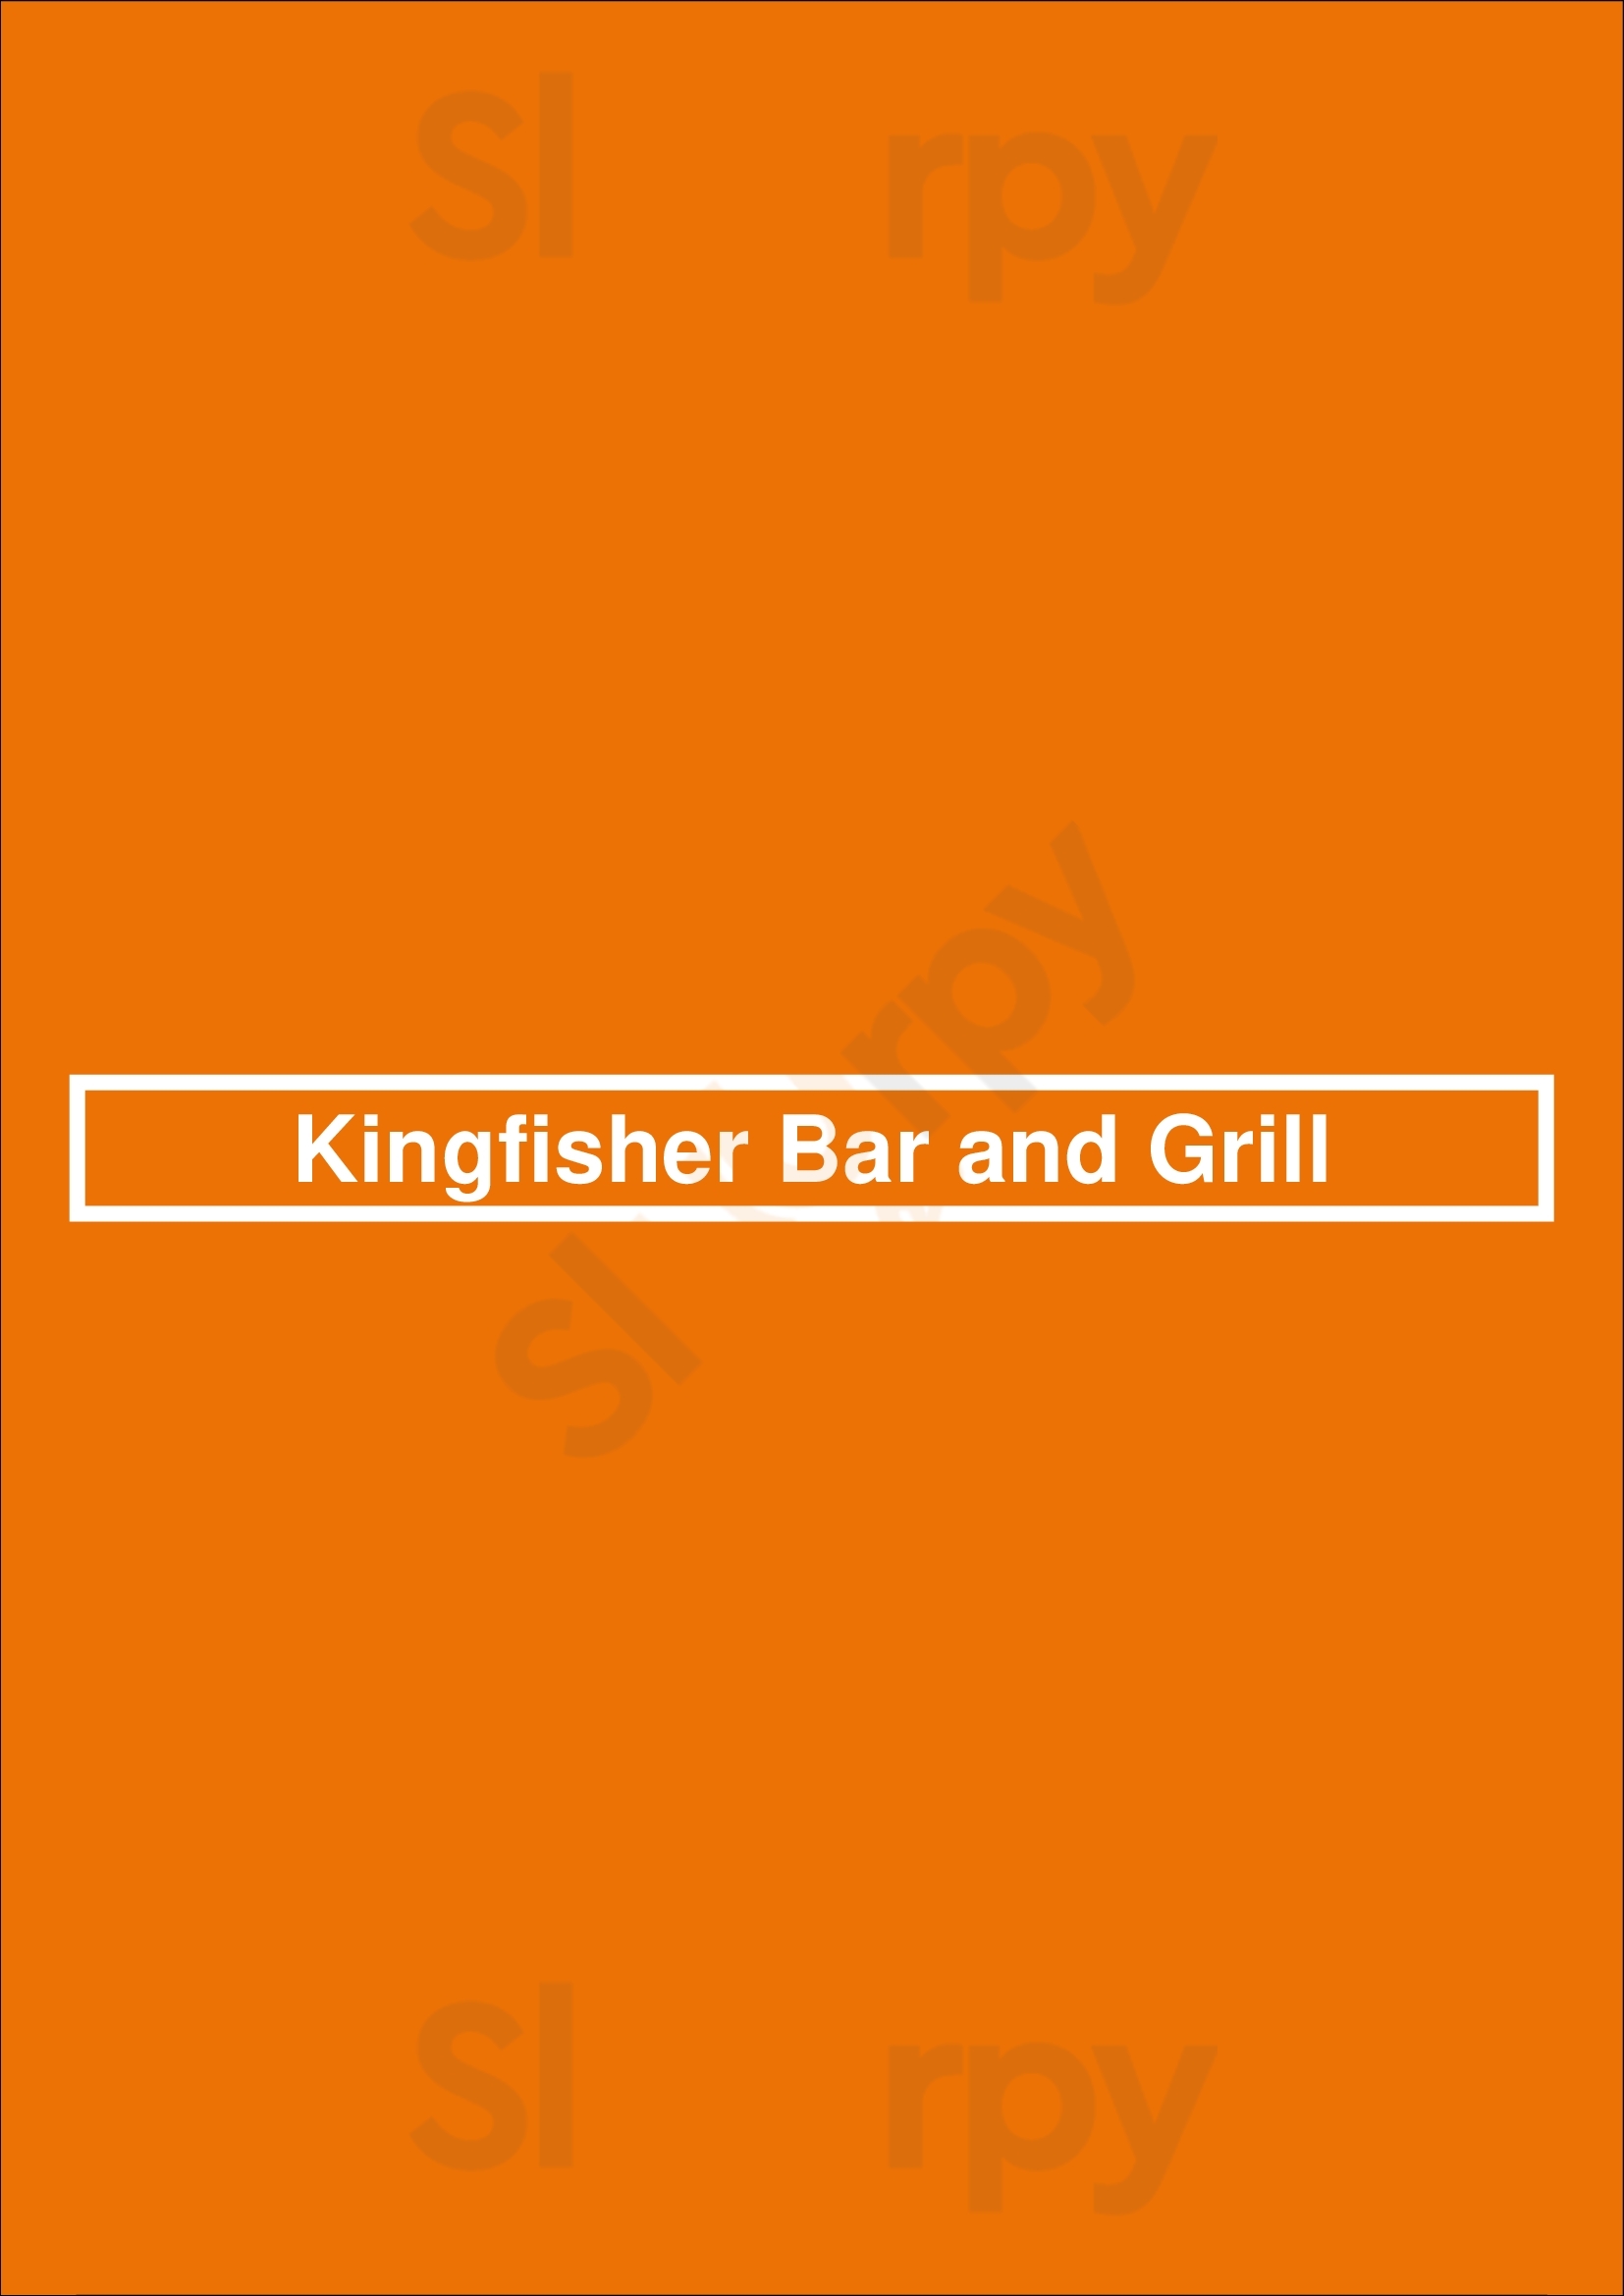 Kingfisher Bar And Grill Tucson Menu - 1